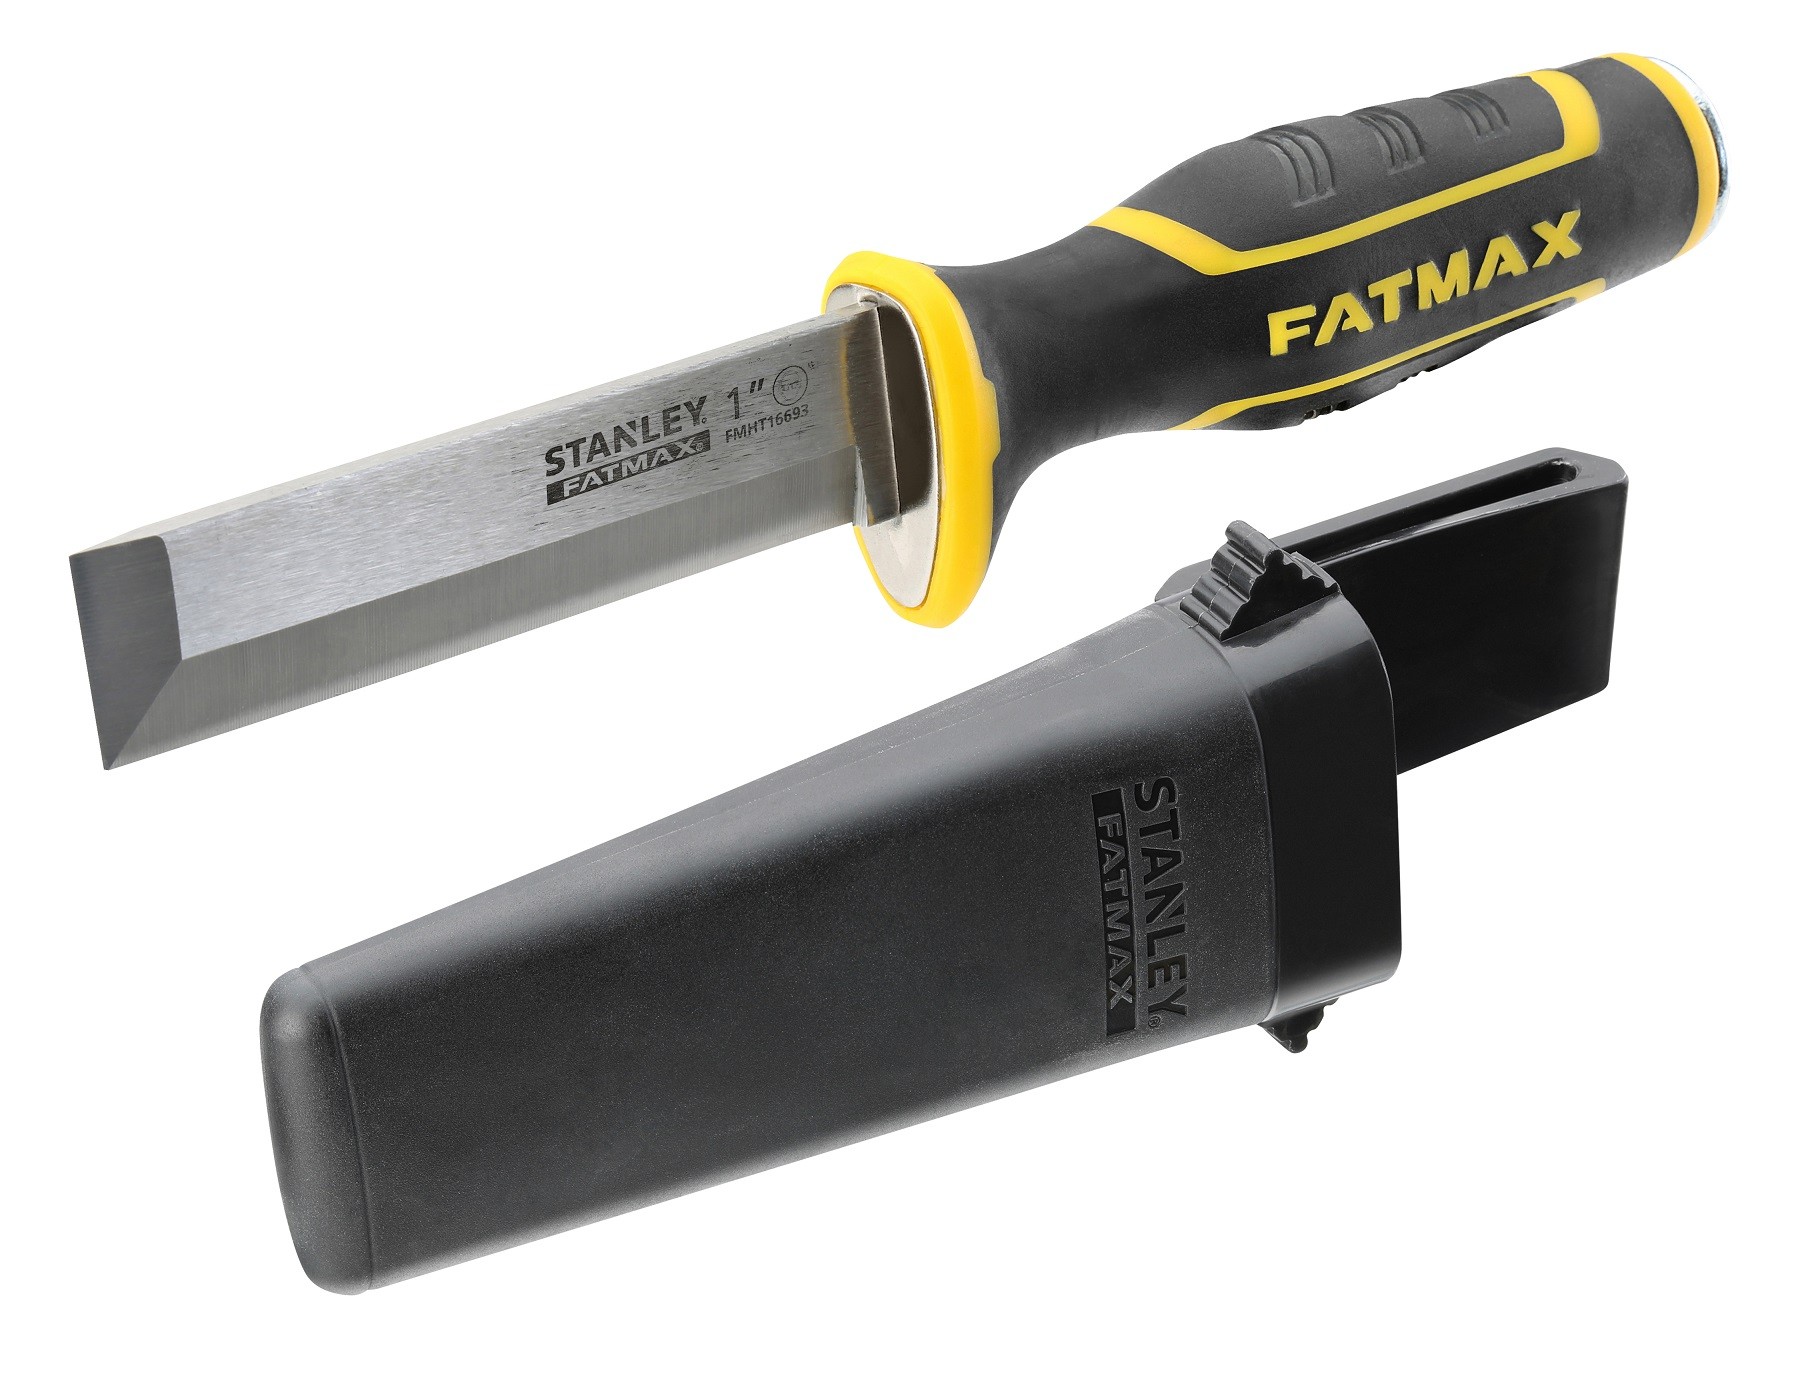 dalta fatmax 25mm pentru lemn, fmht16693-0 stanley